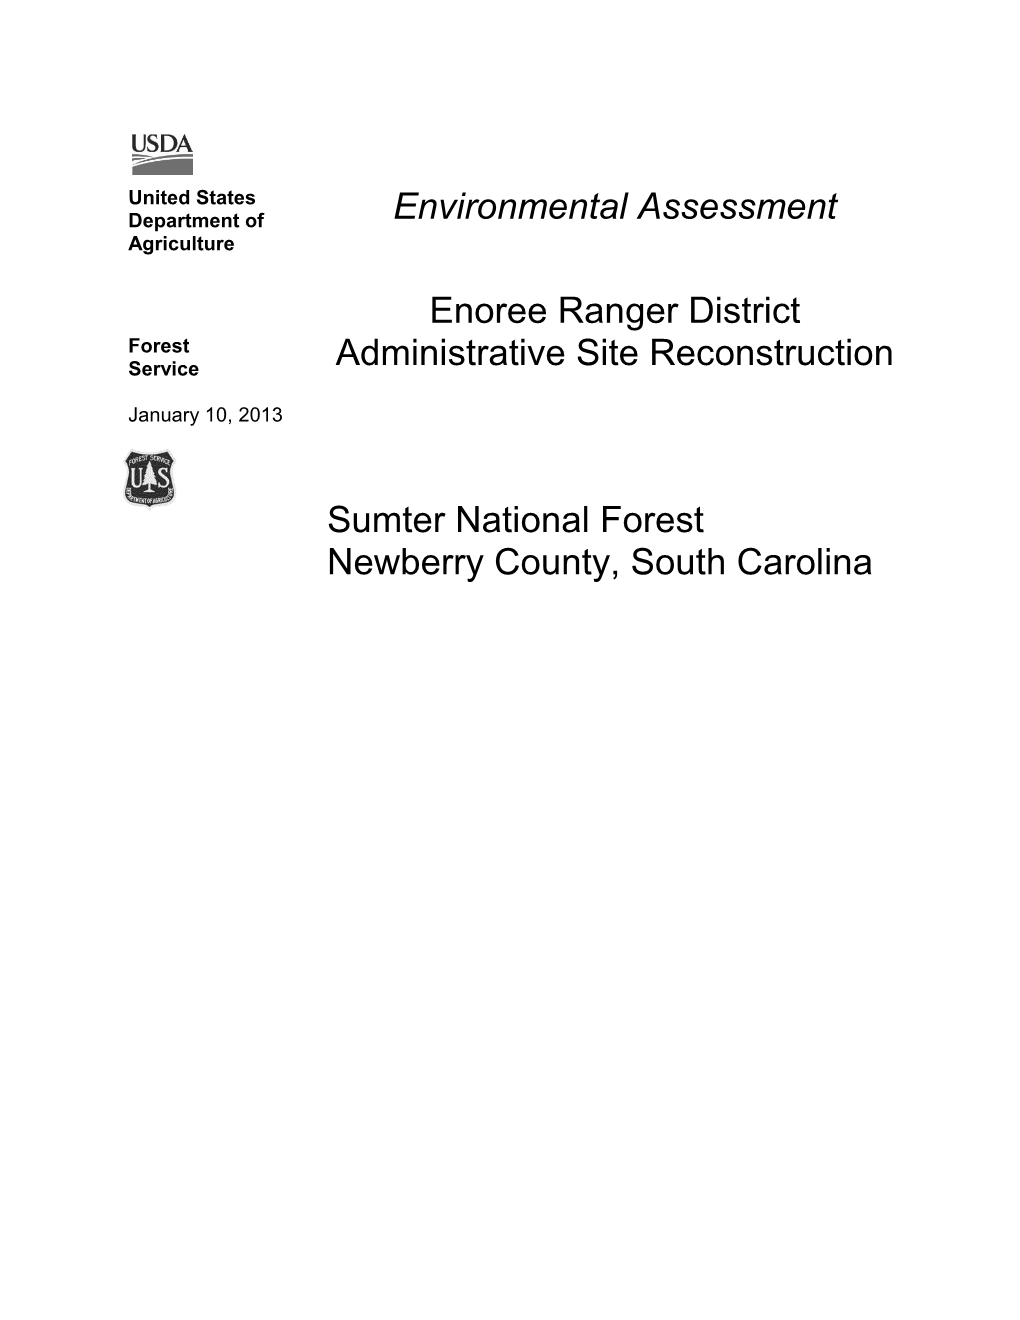 Environmental Assessment Enoree Ranger District Administrative Site